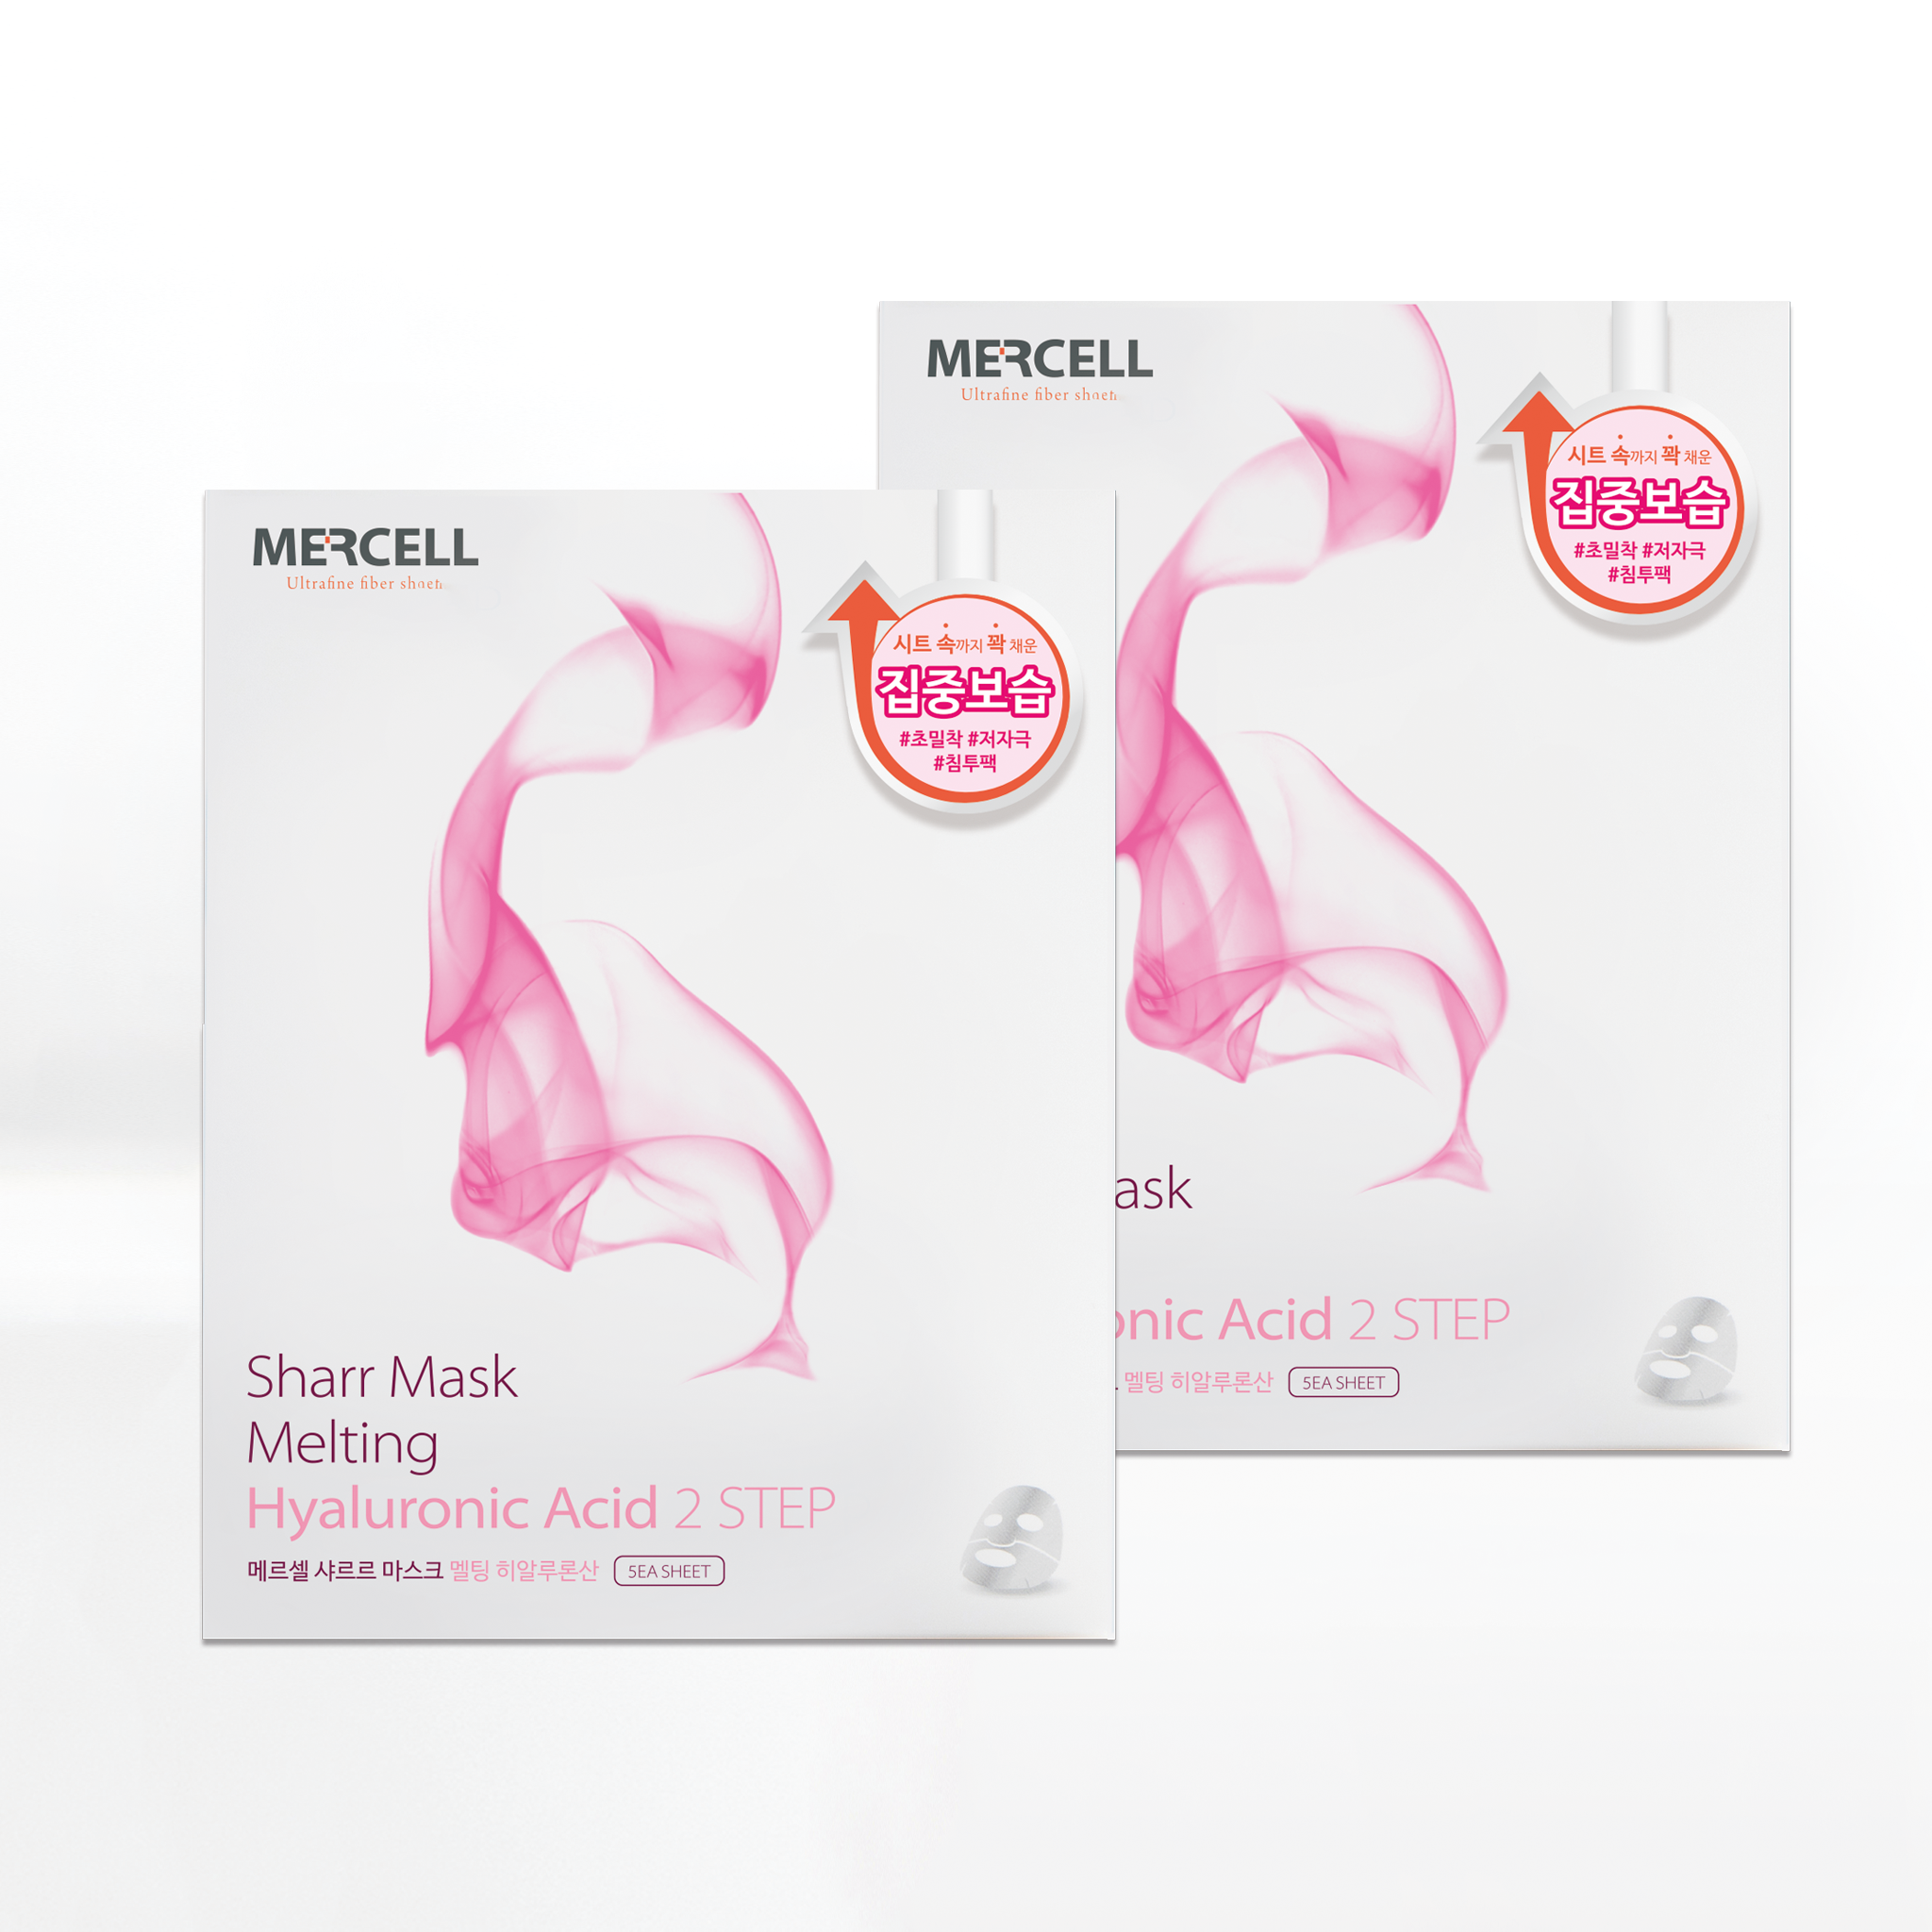 SHARRMASK - Melting Hyaluronic acid Facial Mask (Pink) - Shine 32